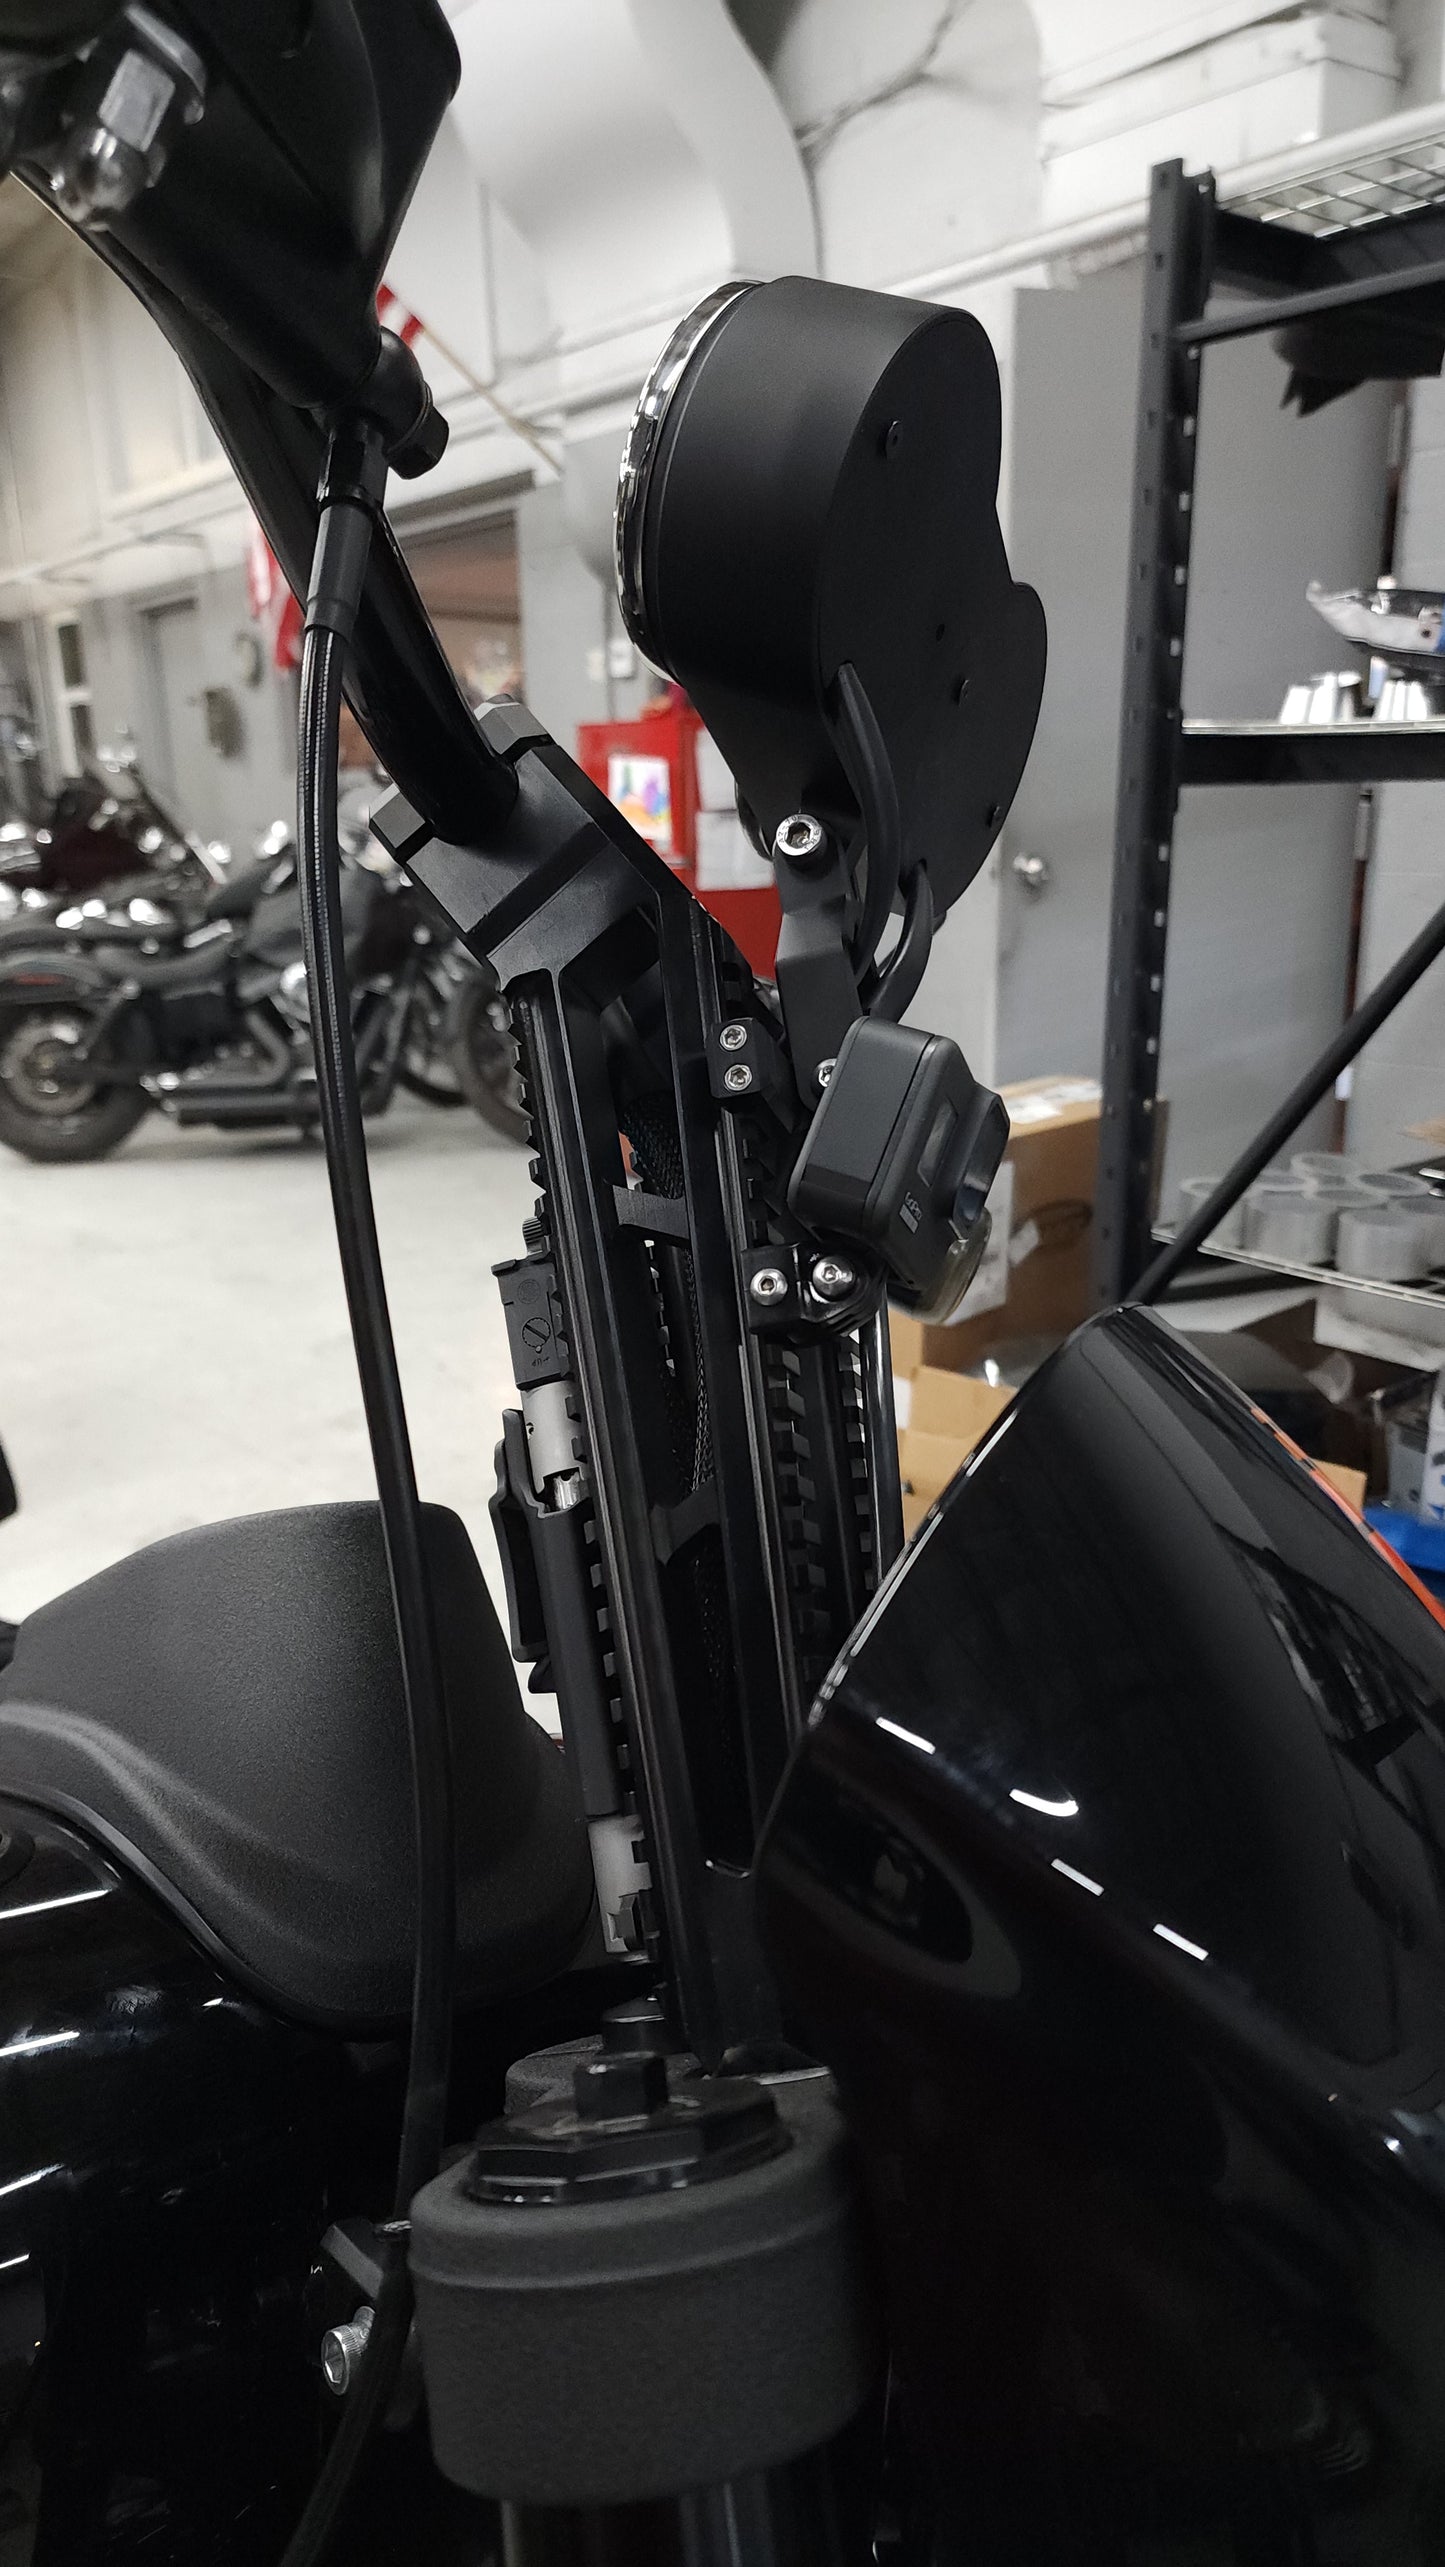 Harley Double Gauge Pic Rail Riser gauge pod kit